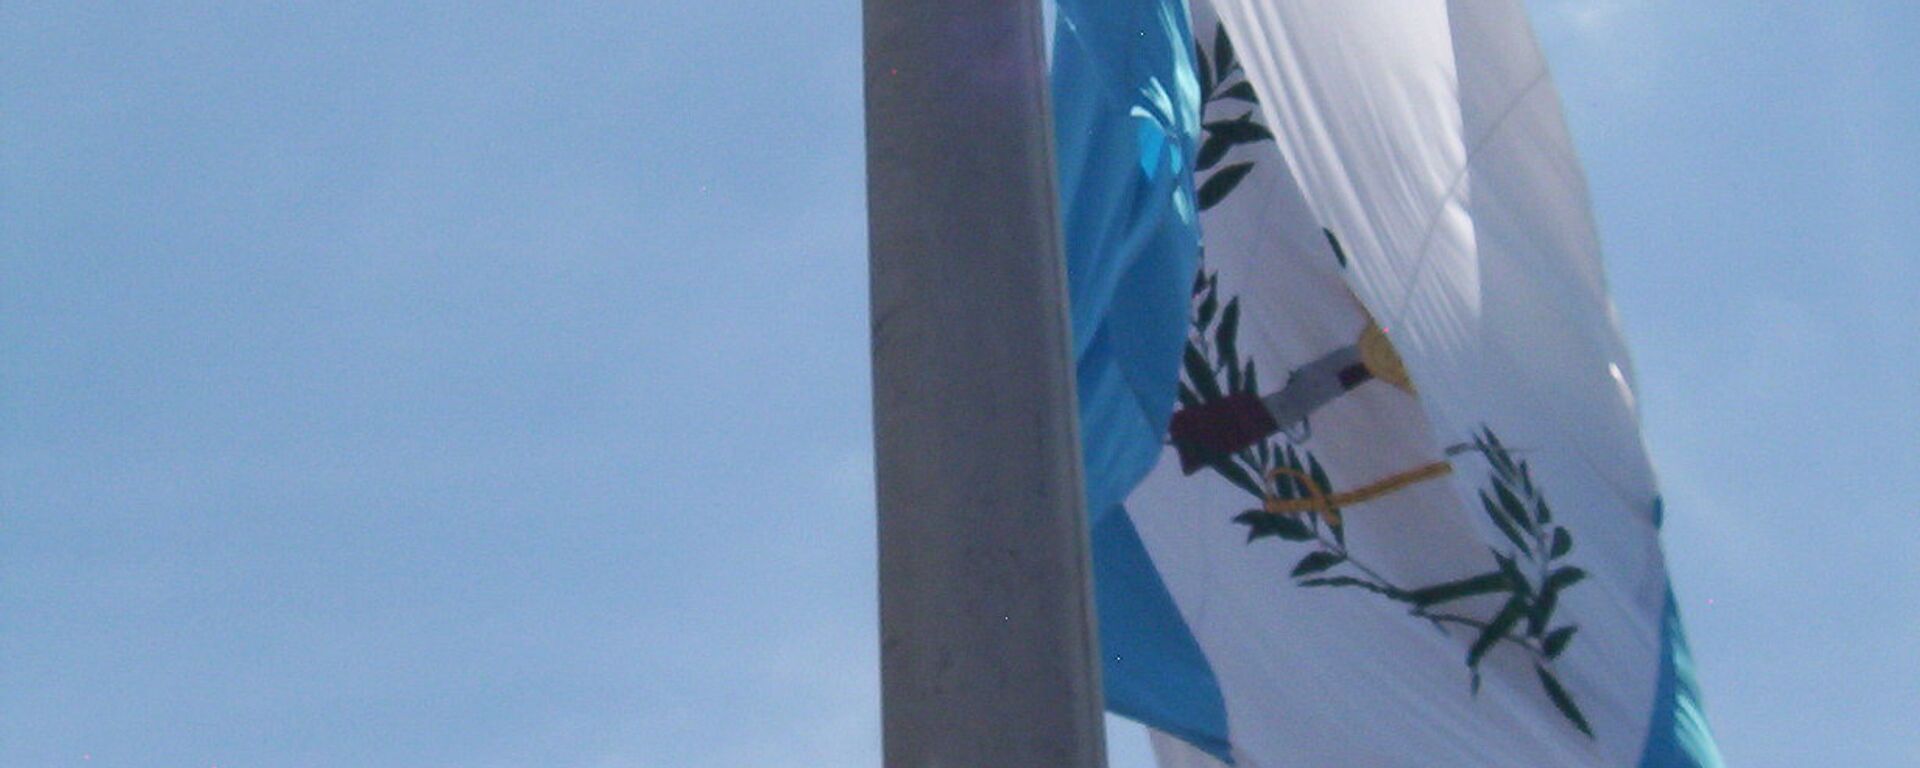 Bandera de Guatemala - Sputnik Mundo, 1920, 14.01.2022